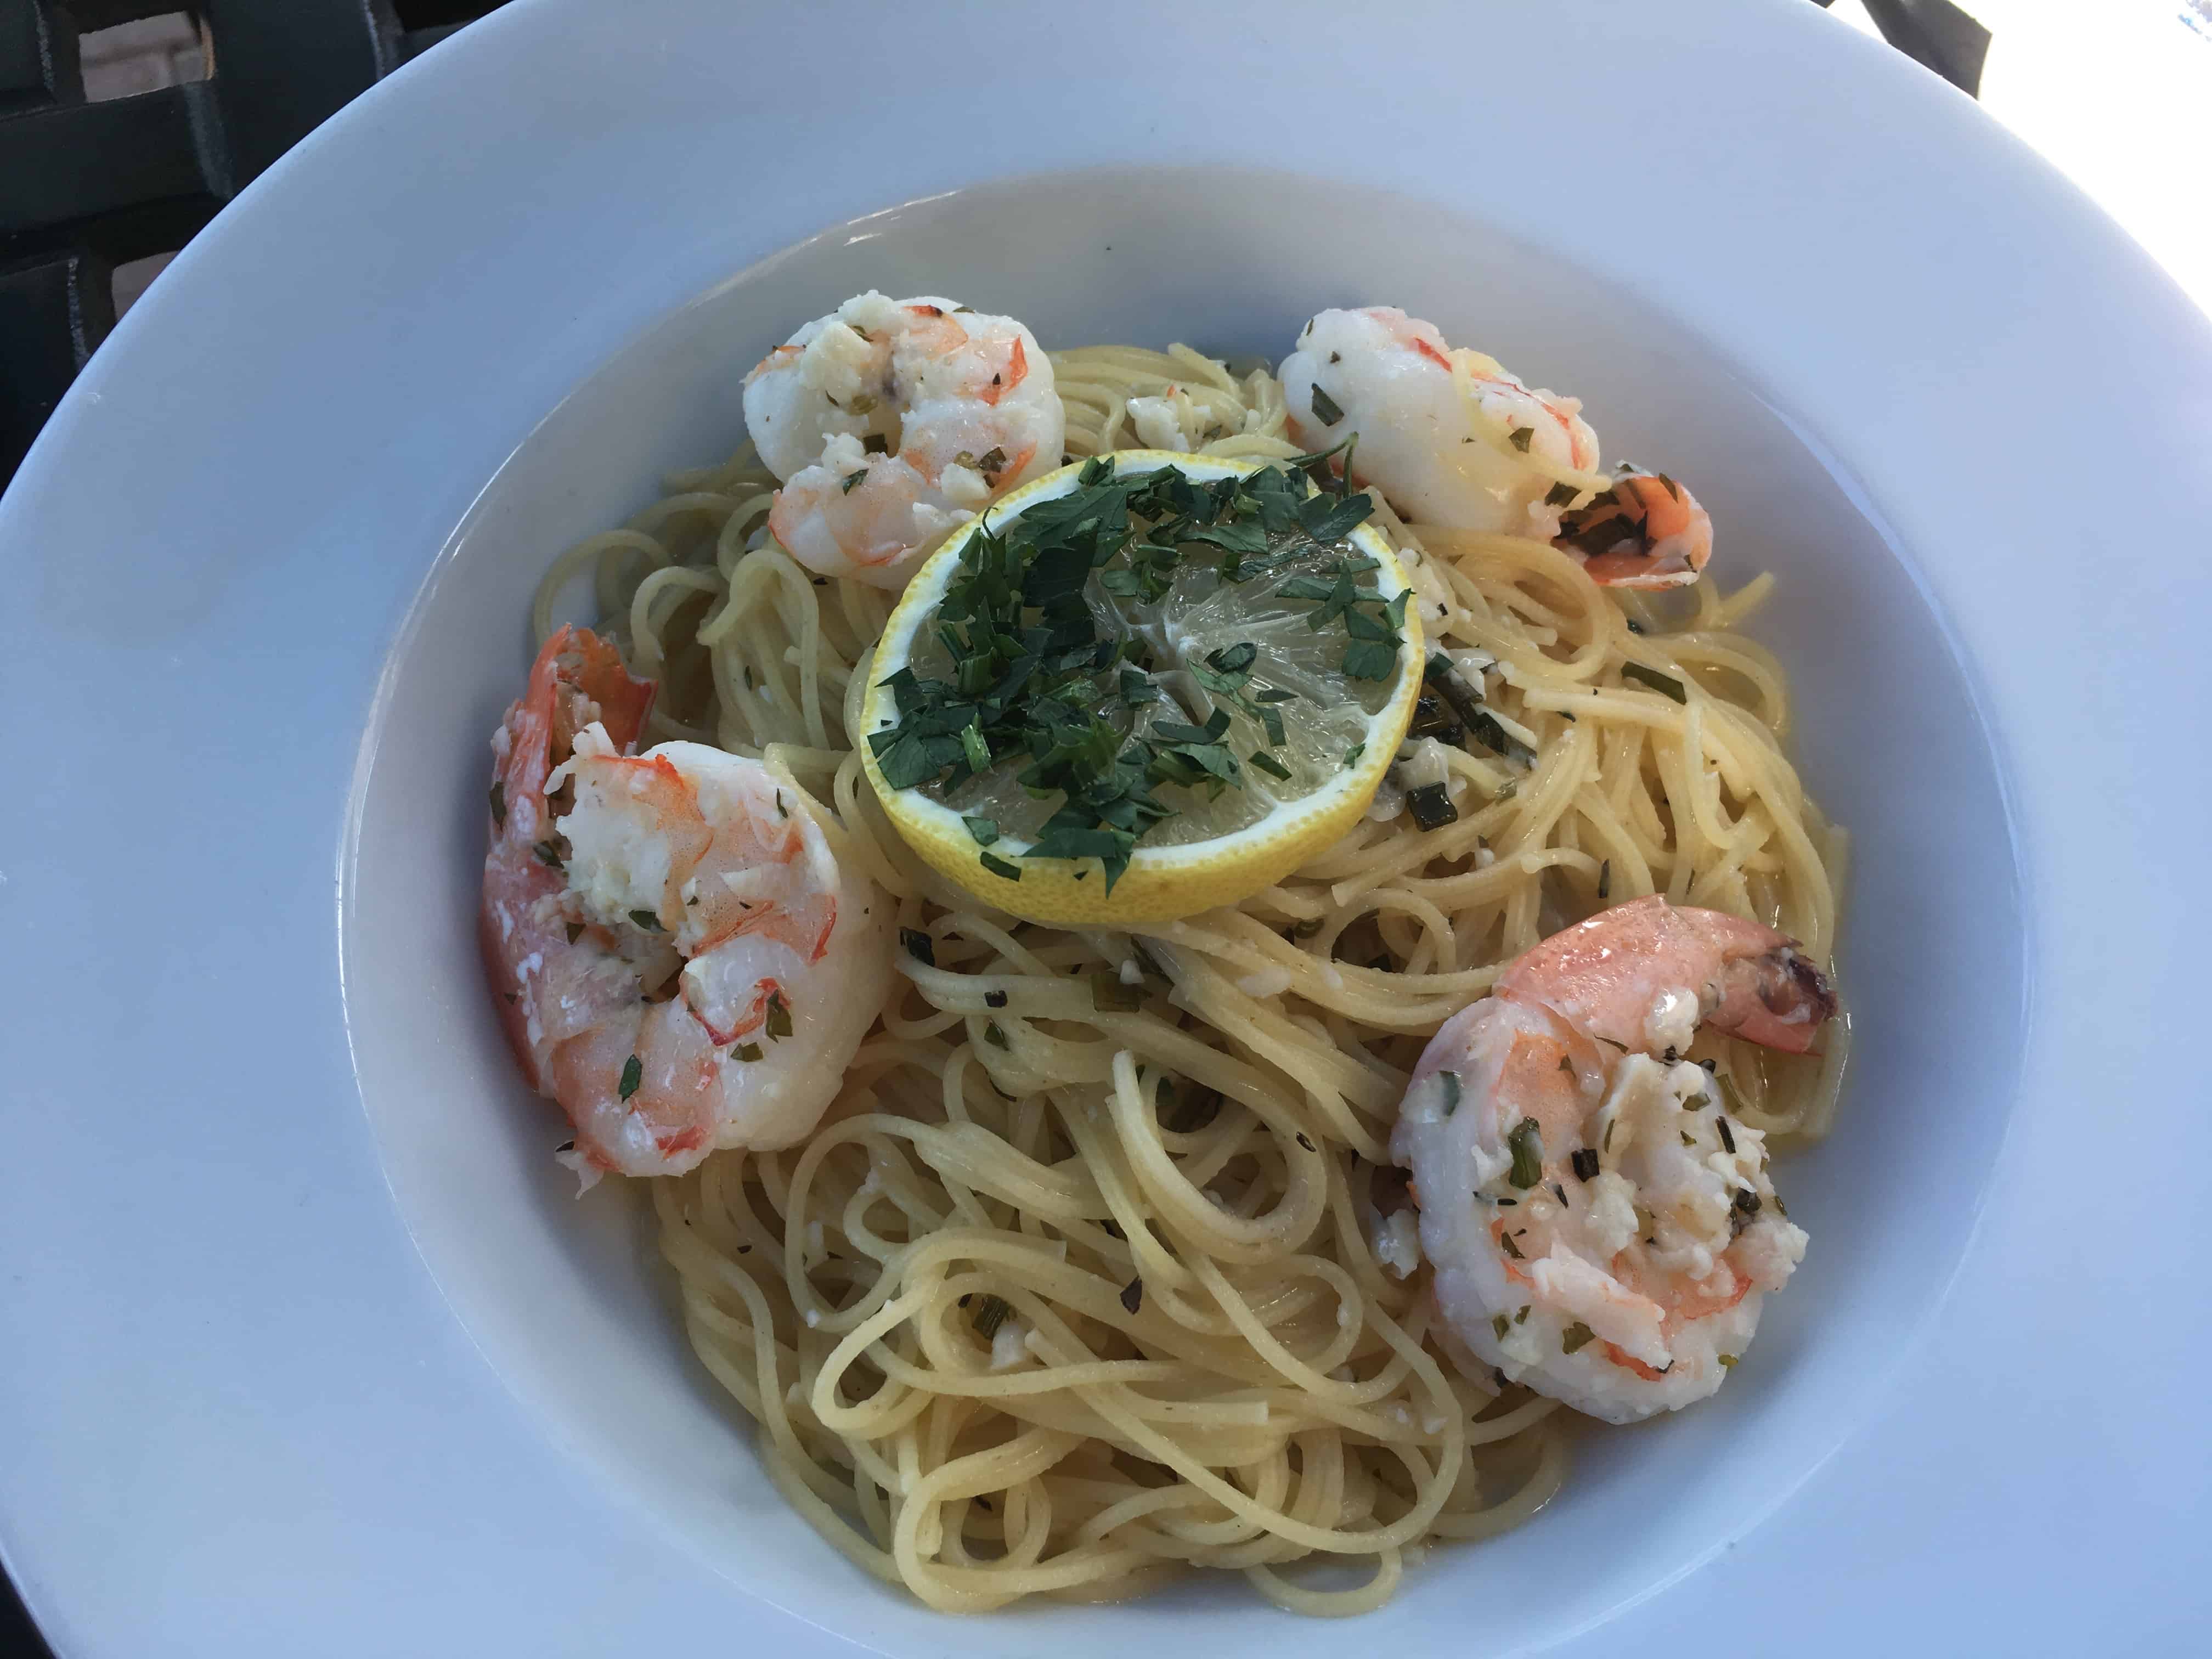 Linguine with shrimp at Parkshore Grill in St. Petersburg, Florida